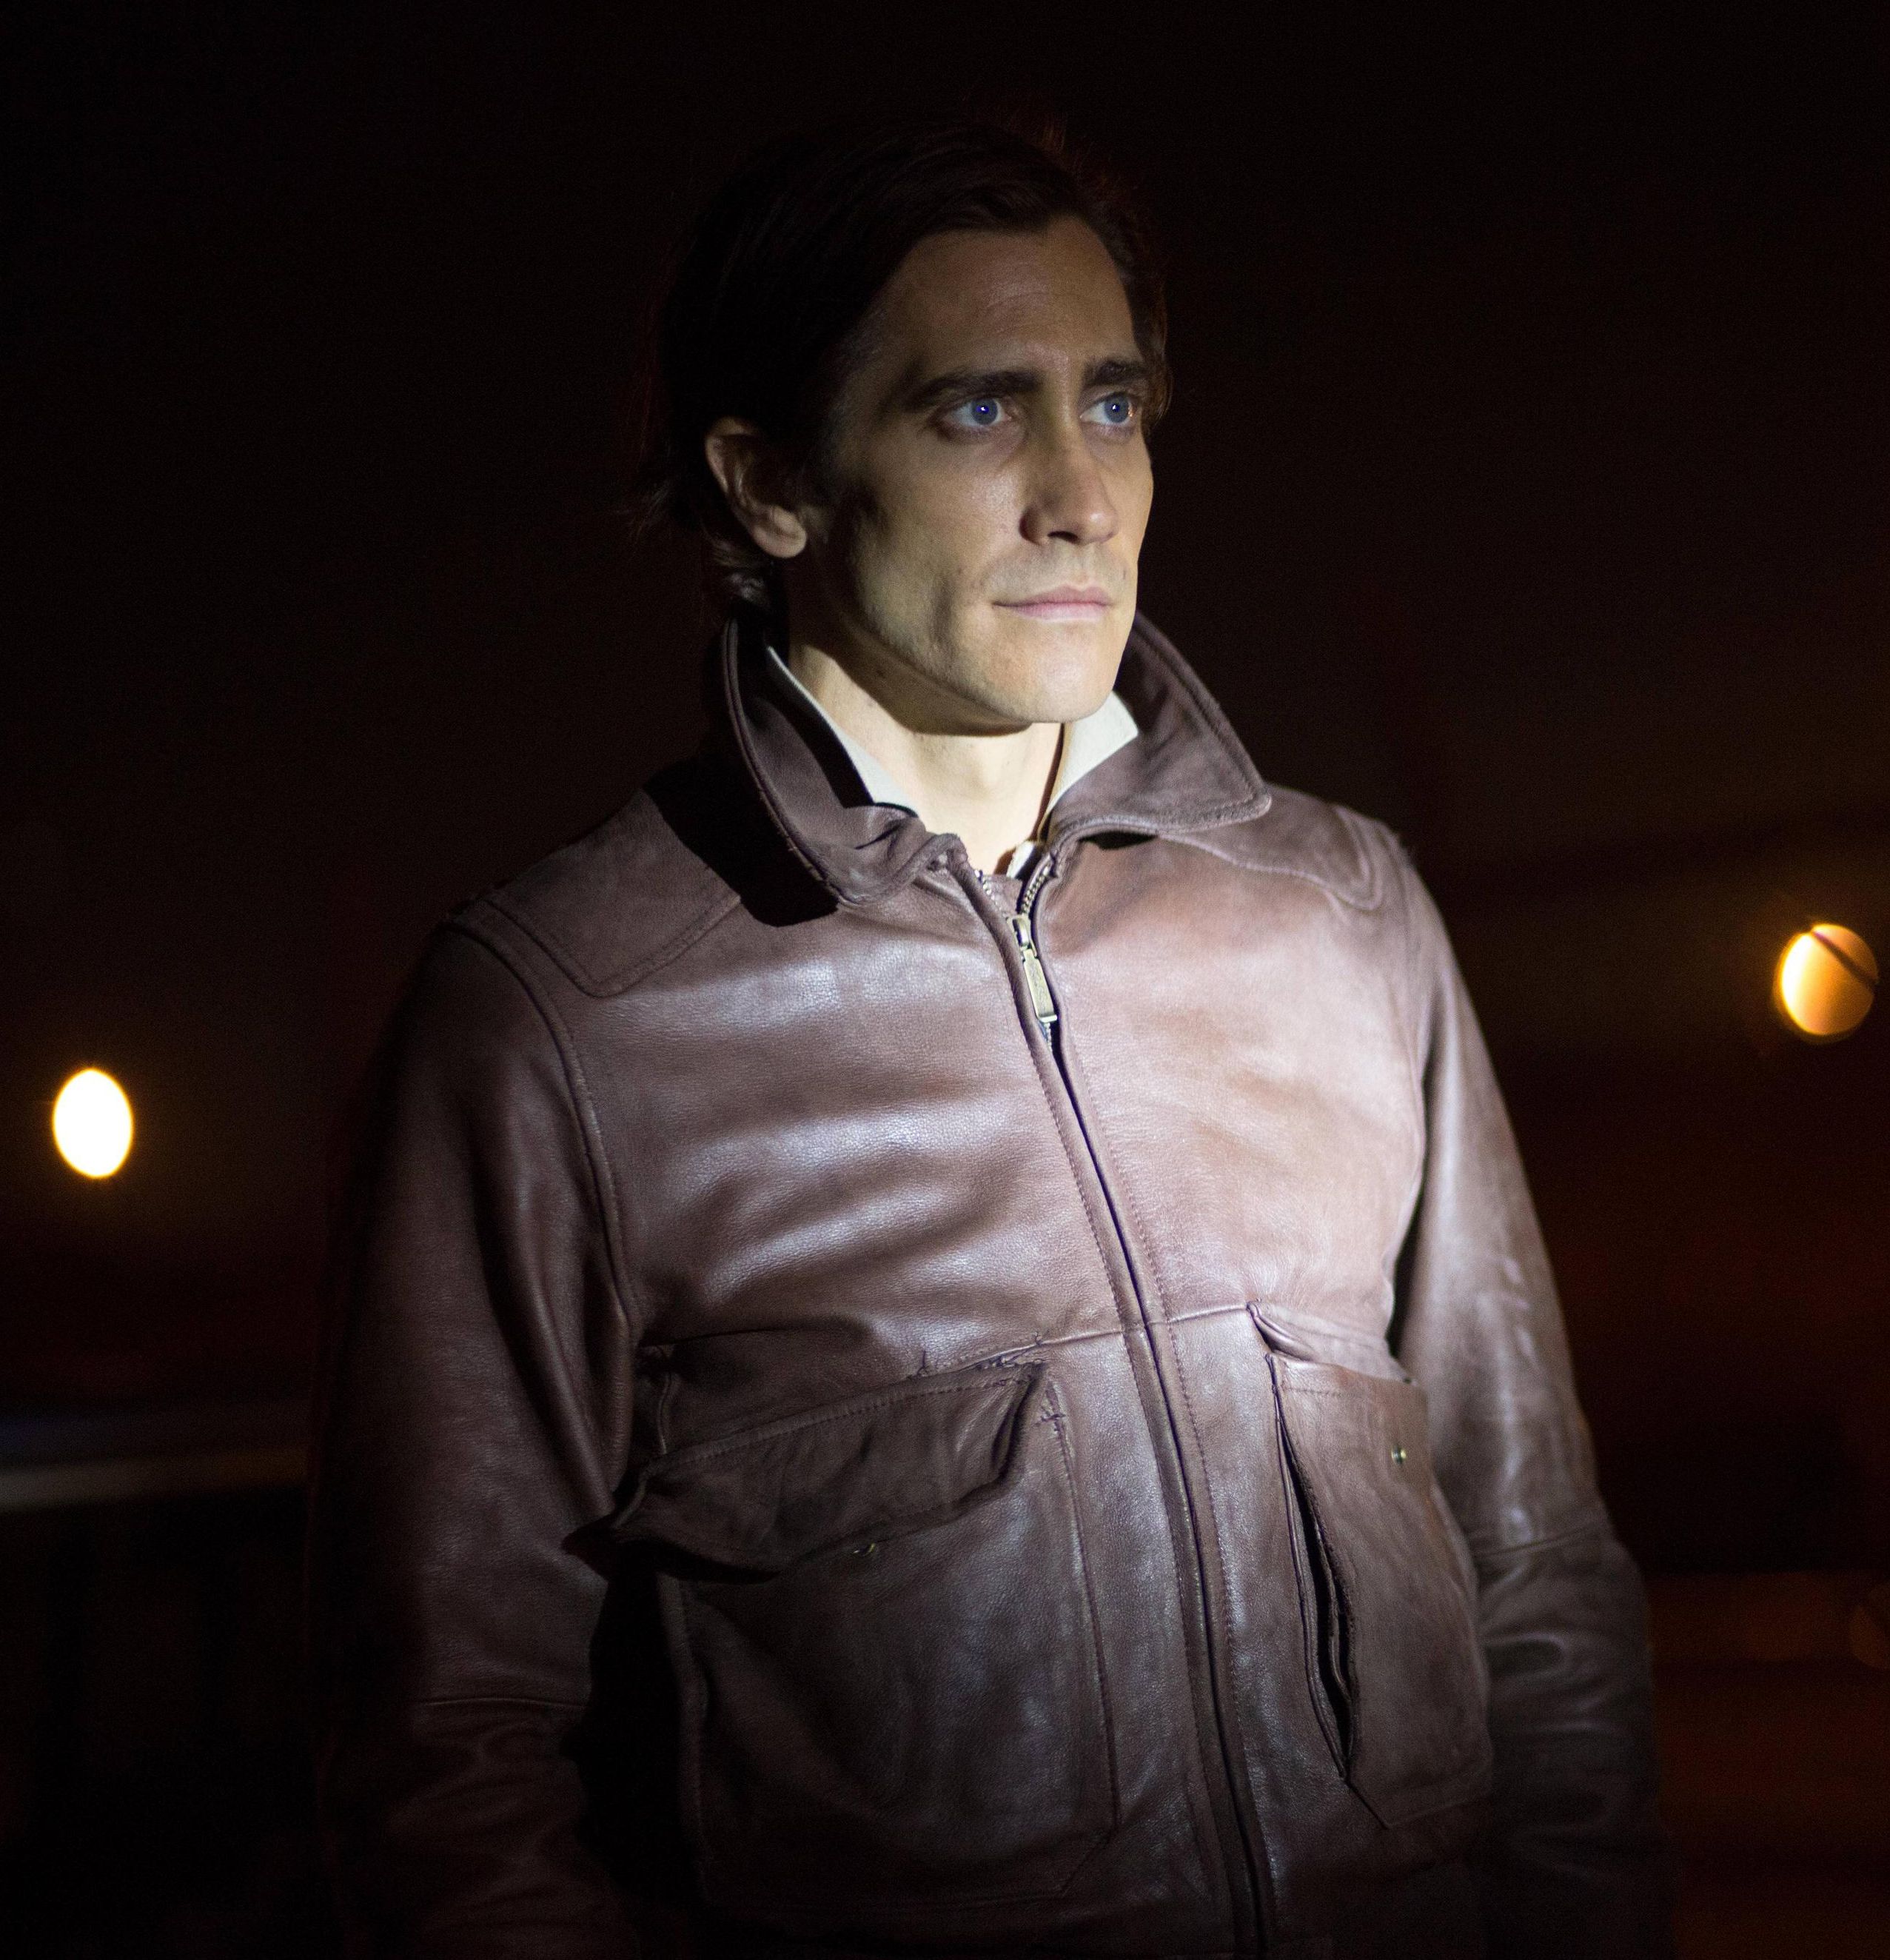 Jake Gyllenhaal as the Nightcrawler in brown leather jacket